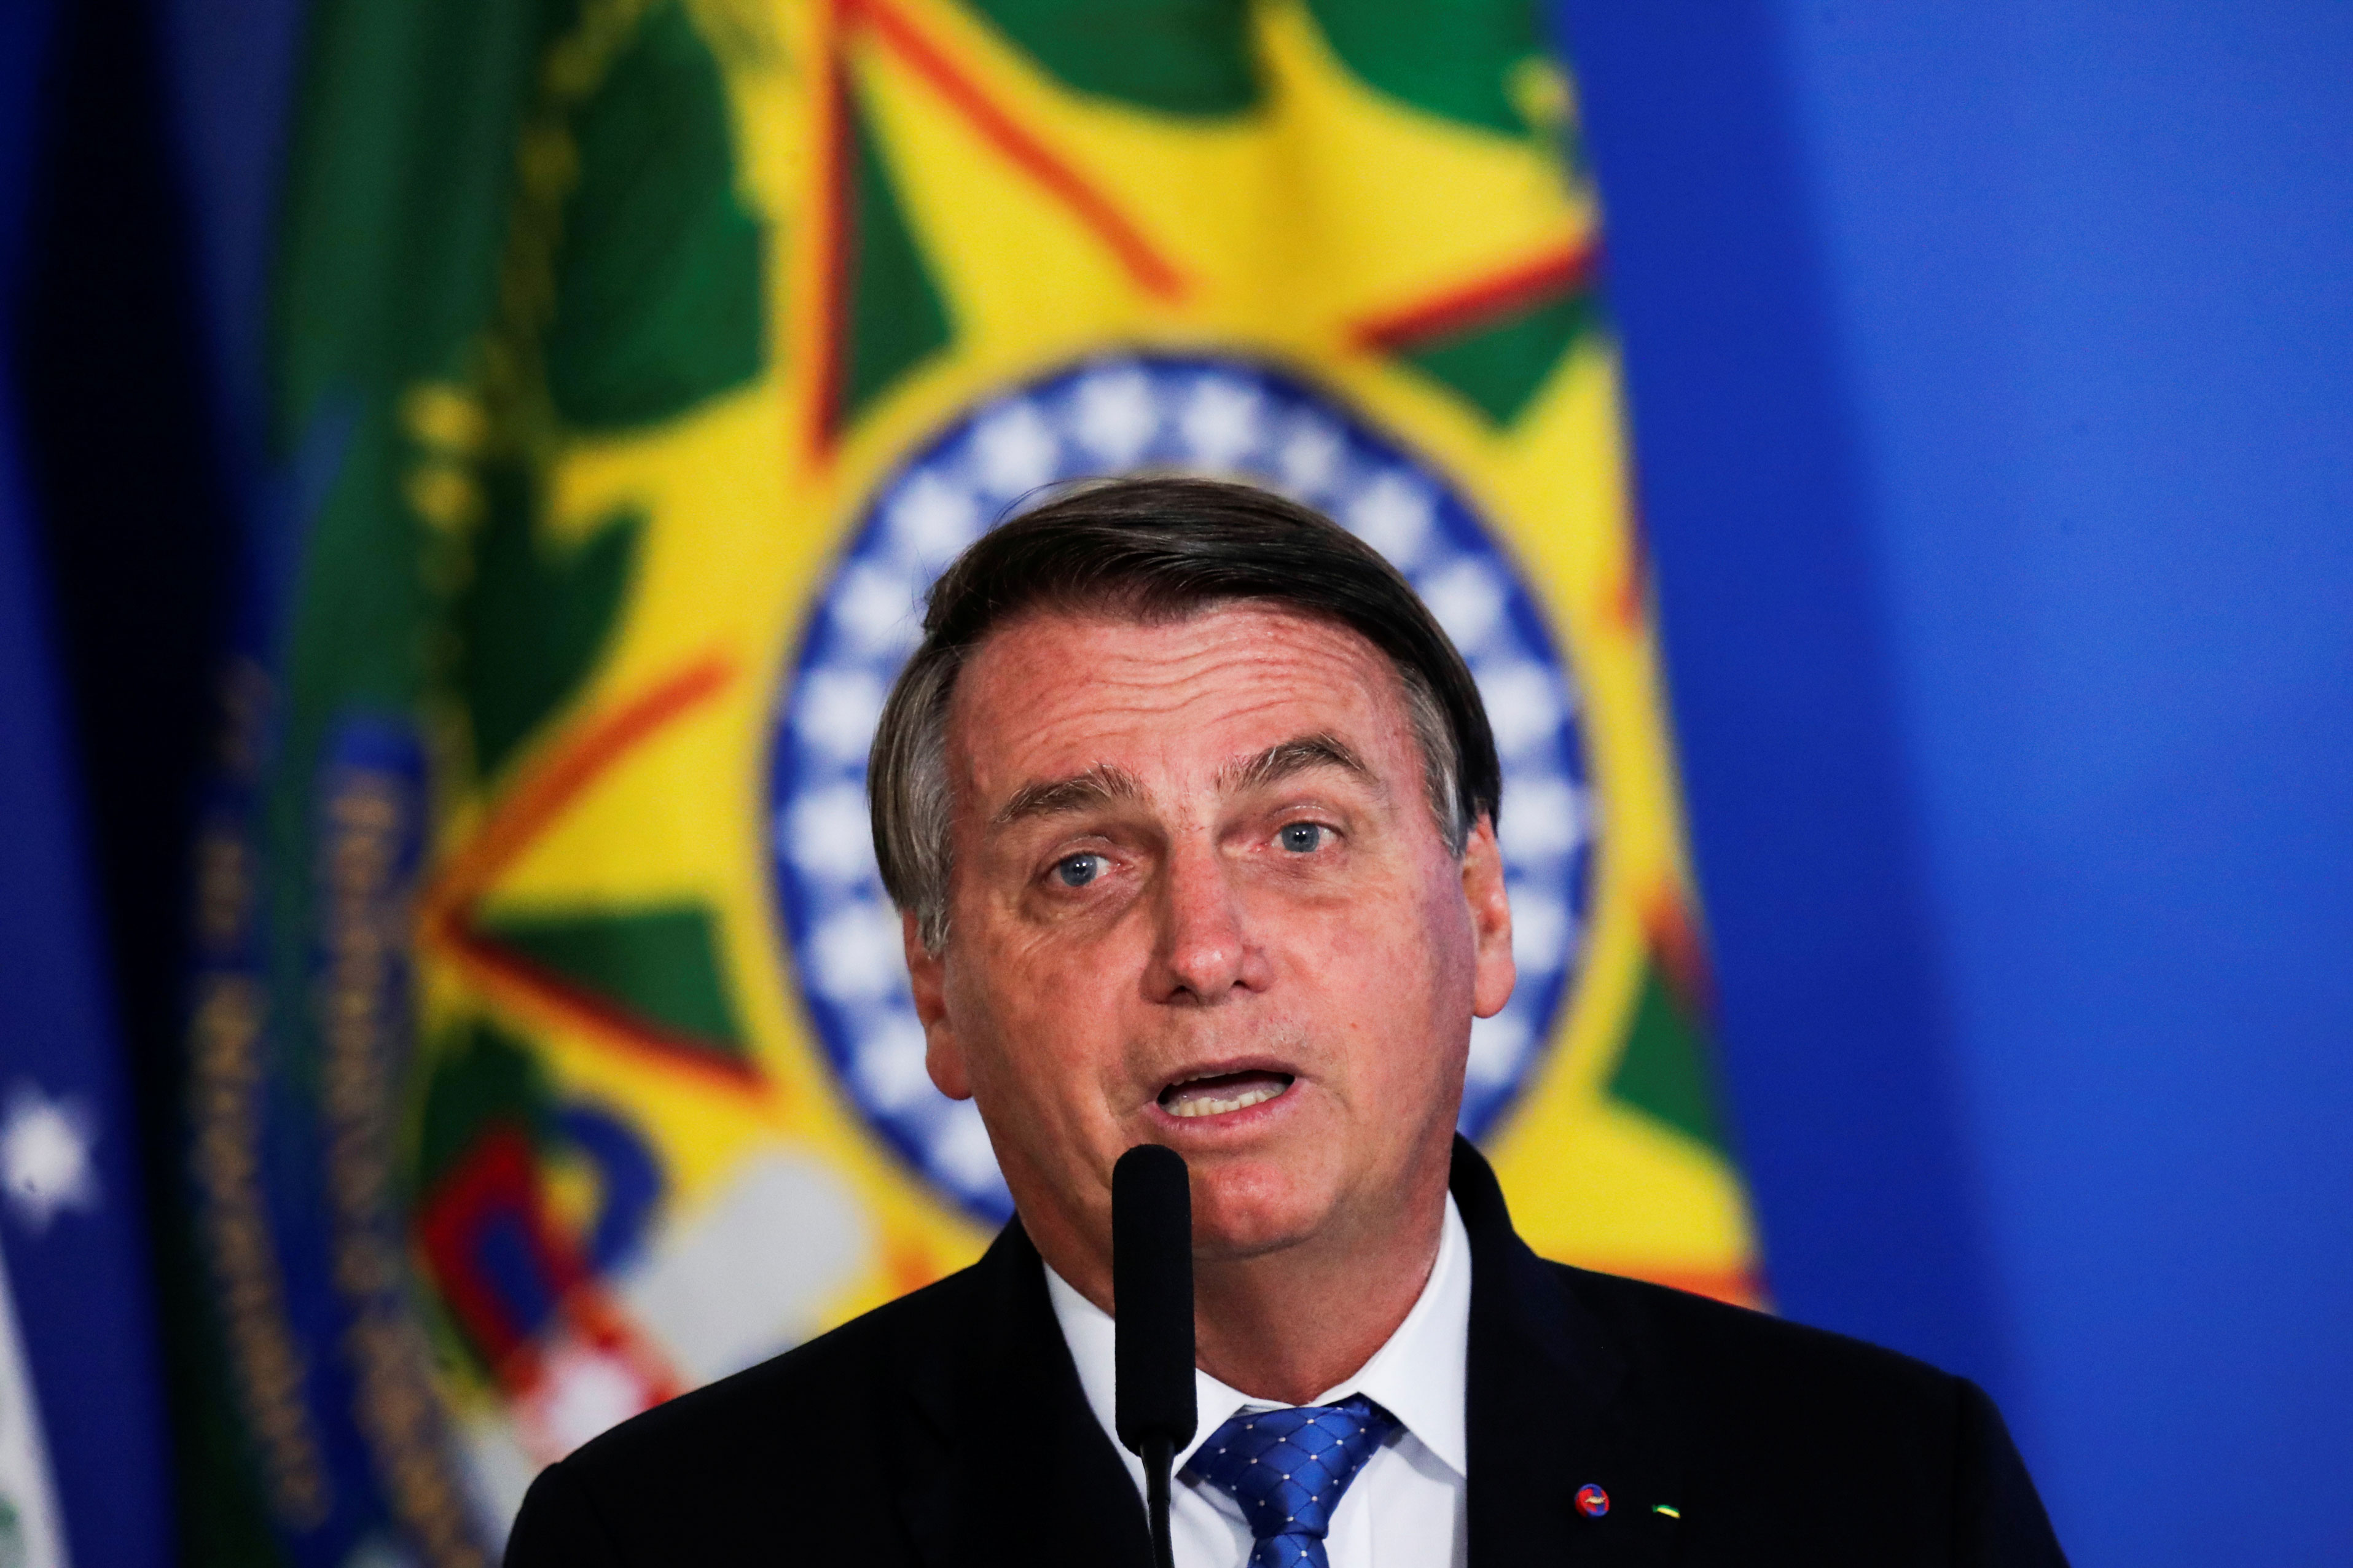 O presidente Jair Bolsonaro durante cerimônia no Palácio do Planalto